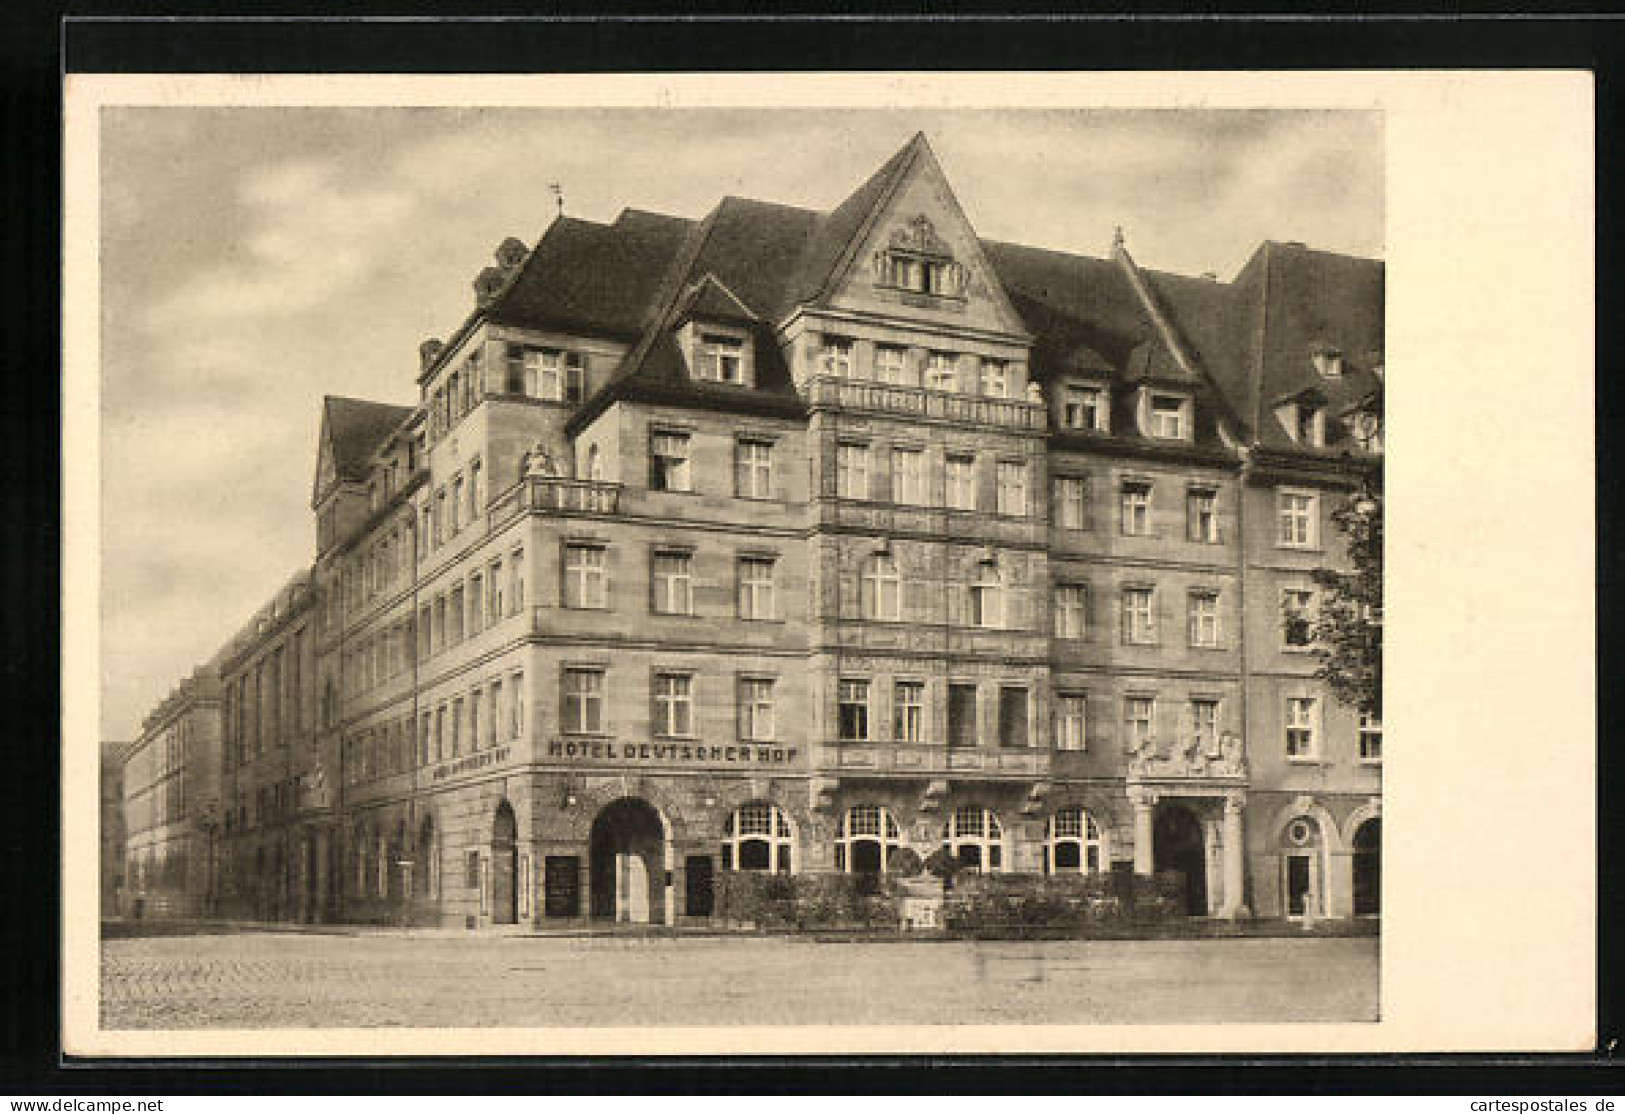 AK Nürnberg, Hotel Deutscher Hof, Inh. J. Klein  - Nürnberg